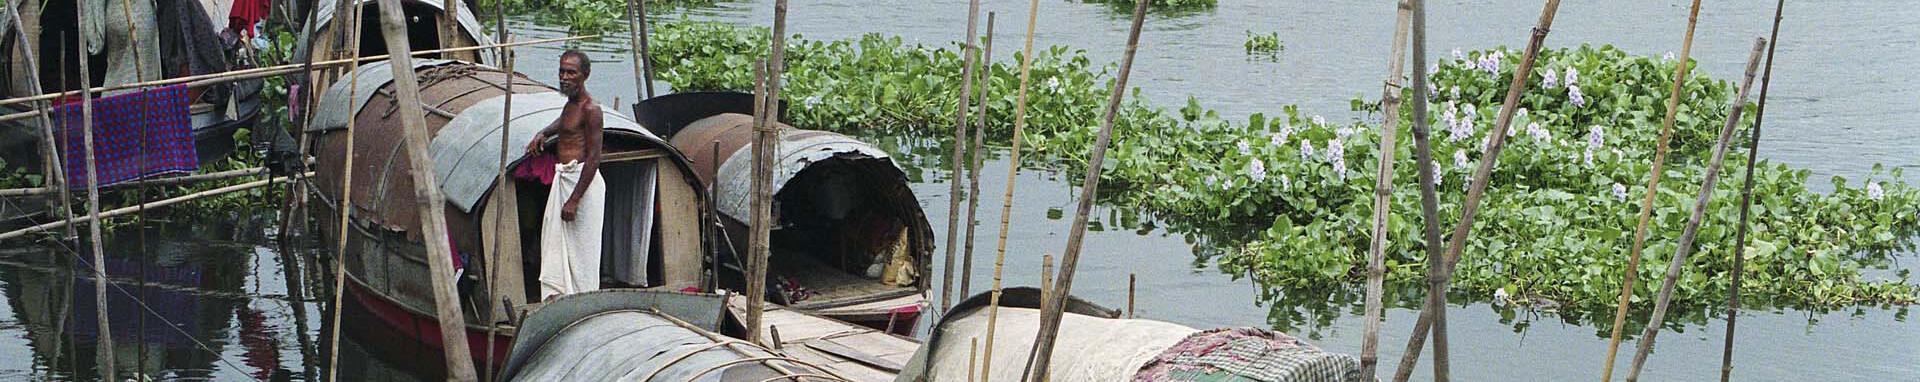 World Bank Photo Collection House boats along the river Bangladesh. Photo: Scott Wallace / World Bank